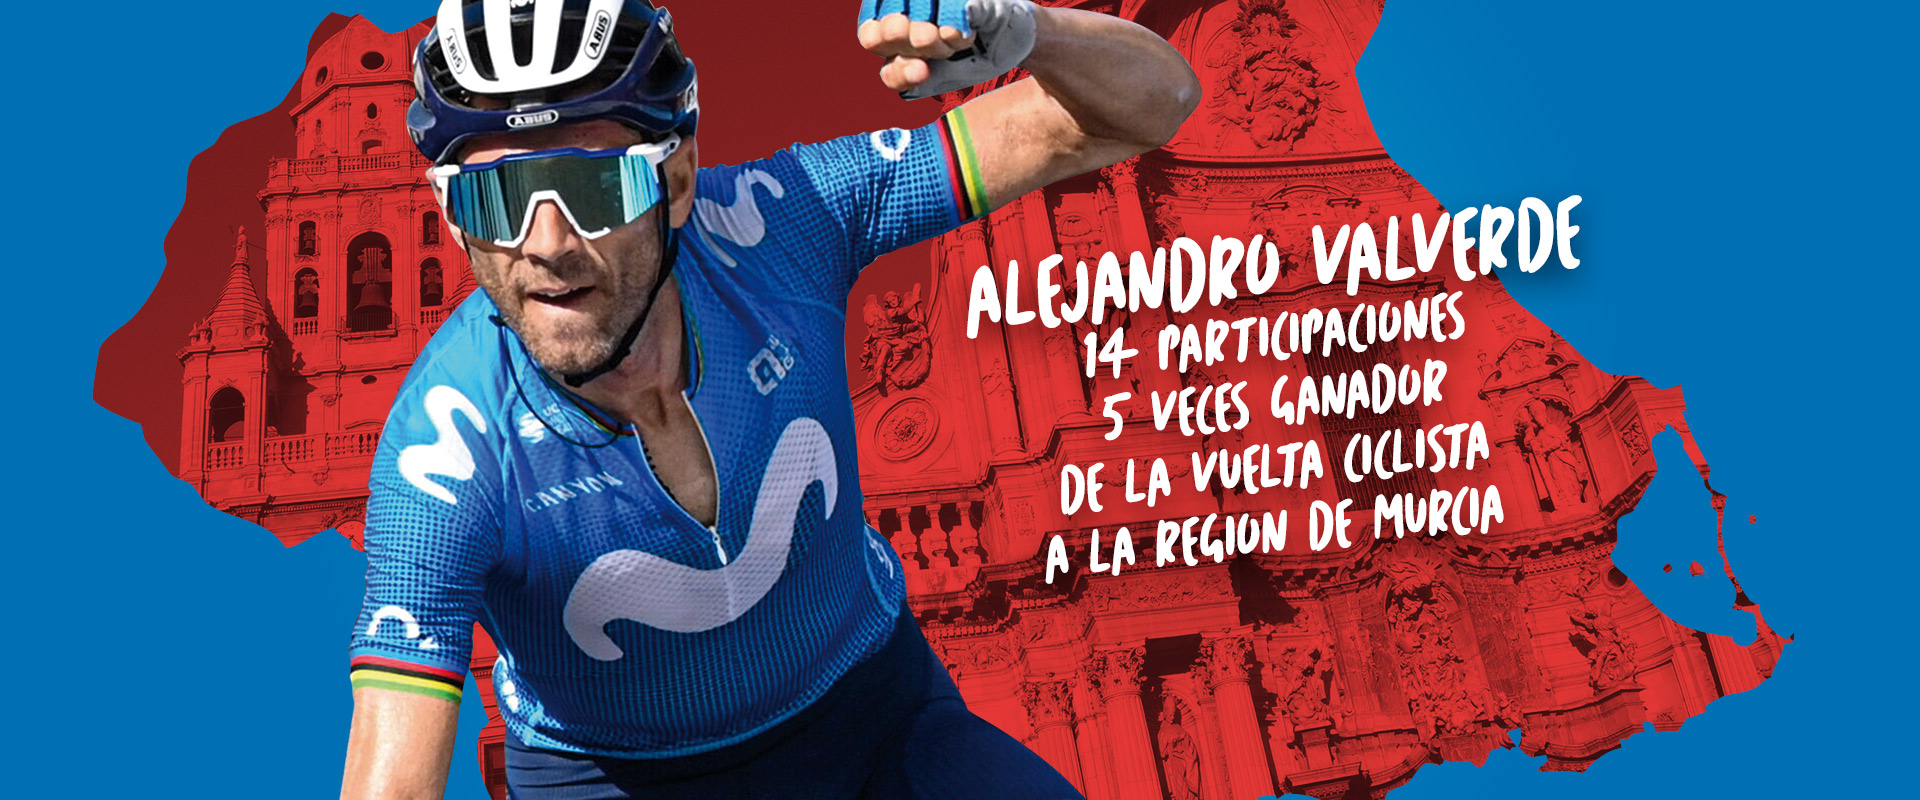 slide front noticia valverde 1 - Previa Vuelta a Murcia 2022 - Recorrido, análisis y favoritos